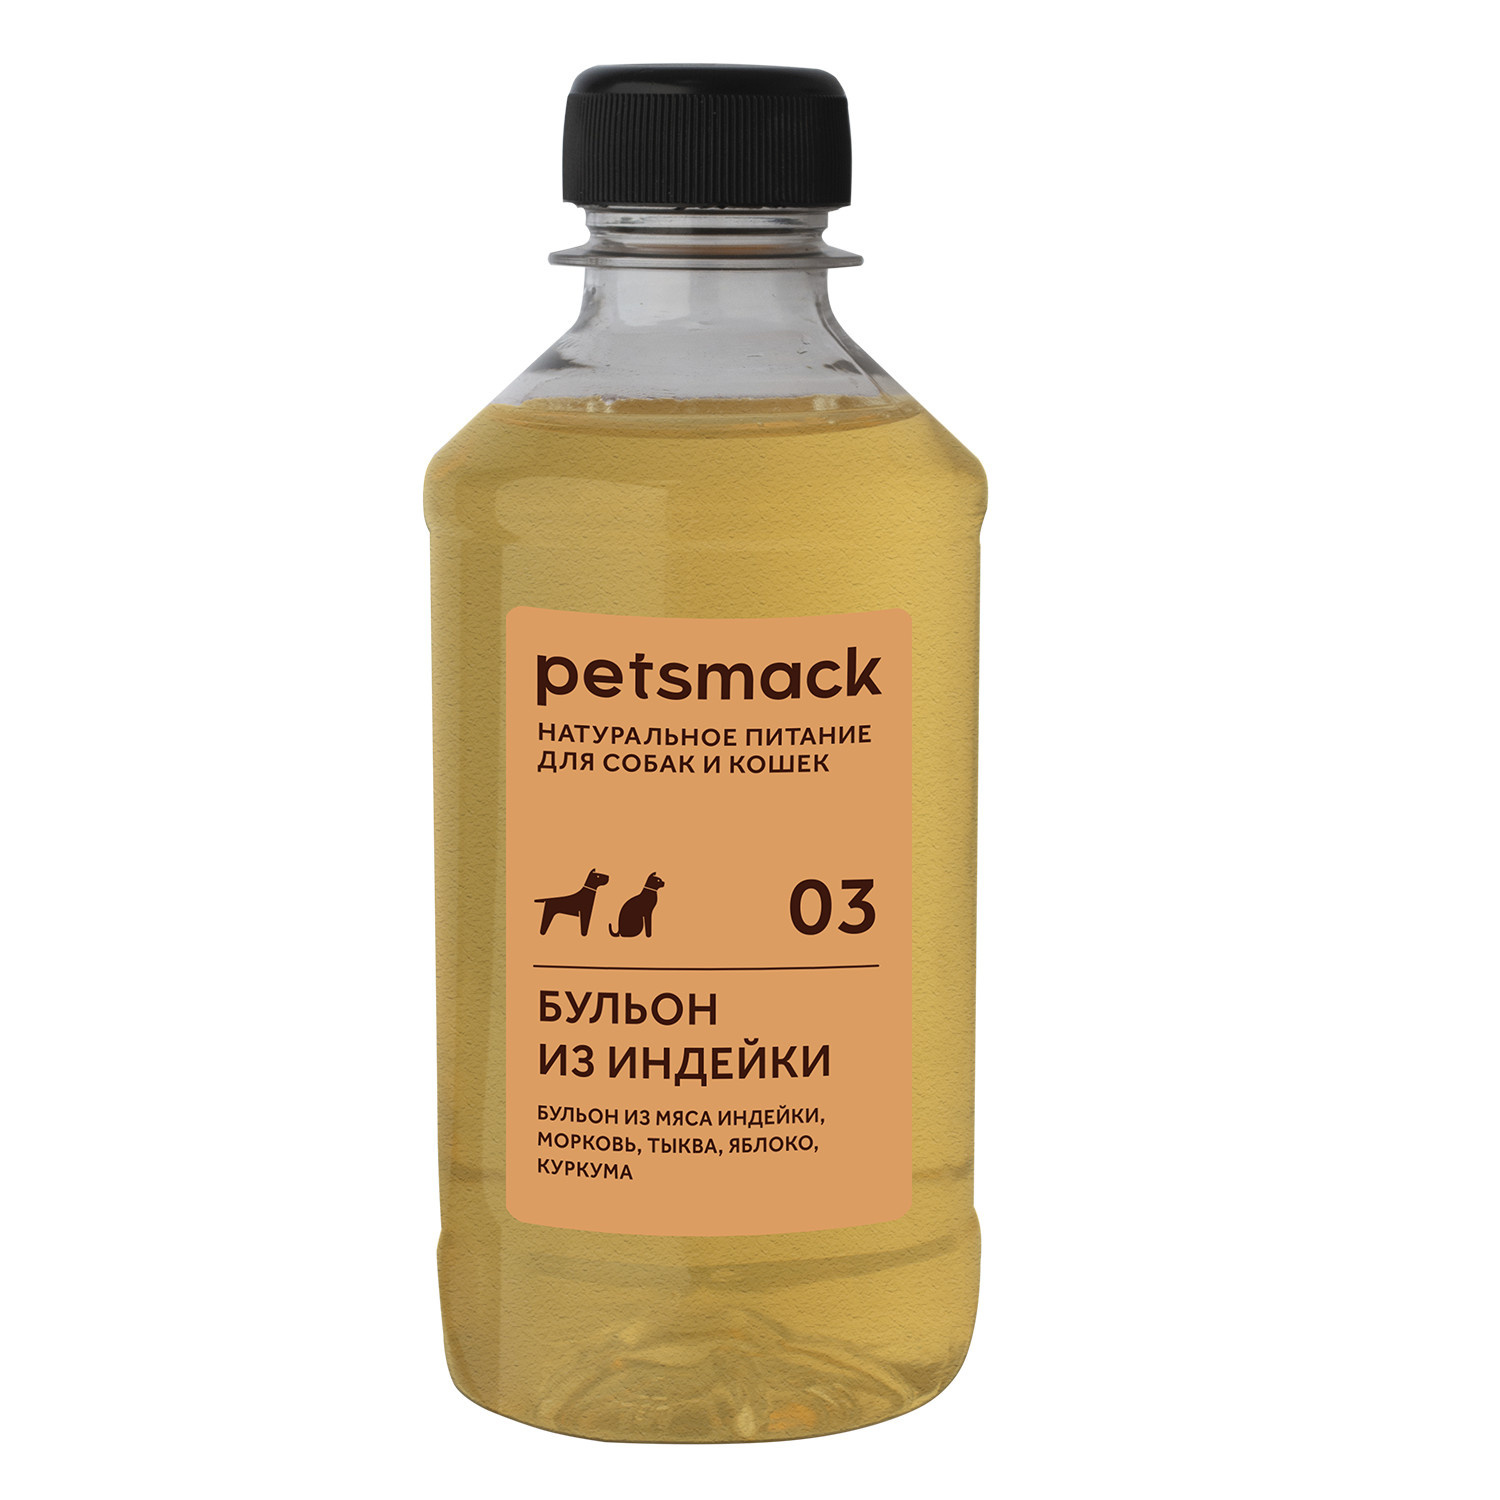 Petsmack Petsmack бульон из индейки (260 г) 43262